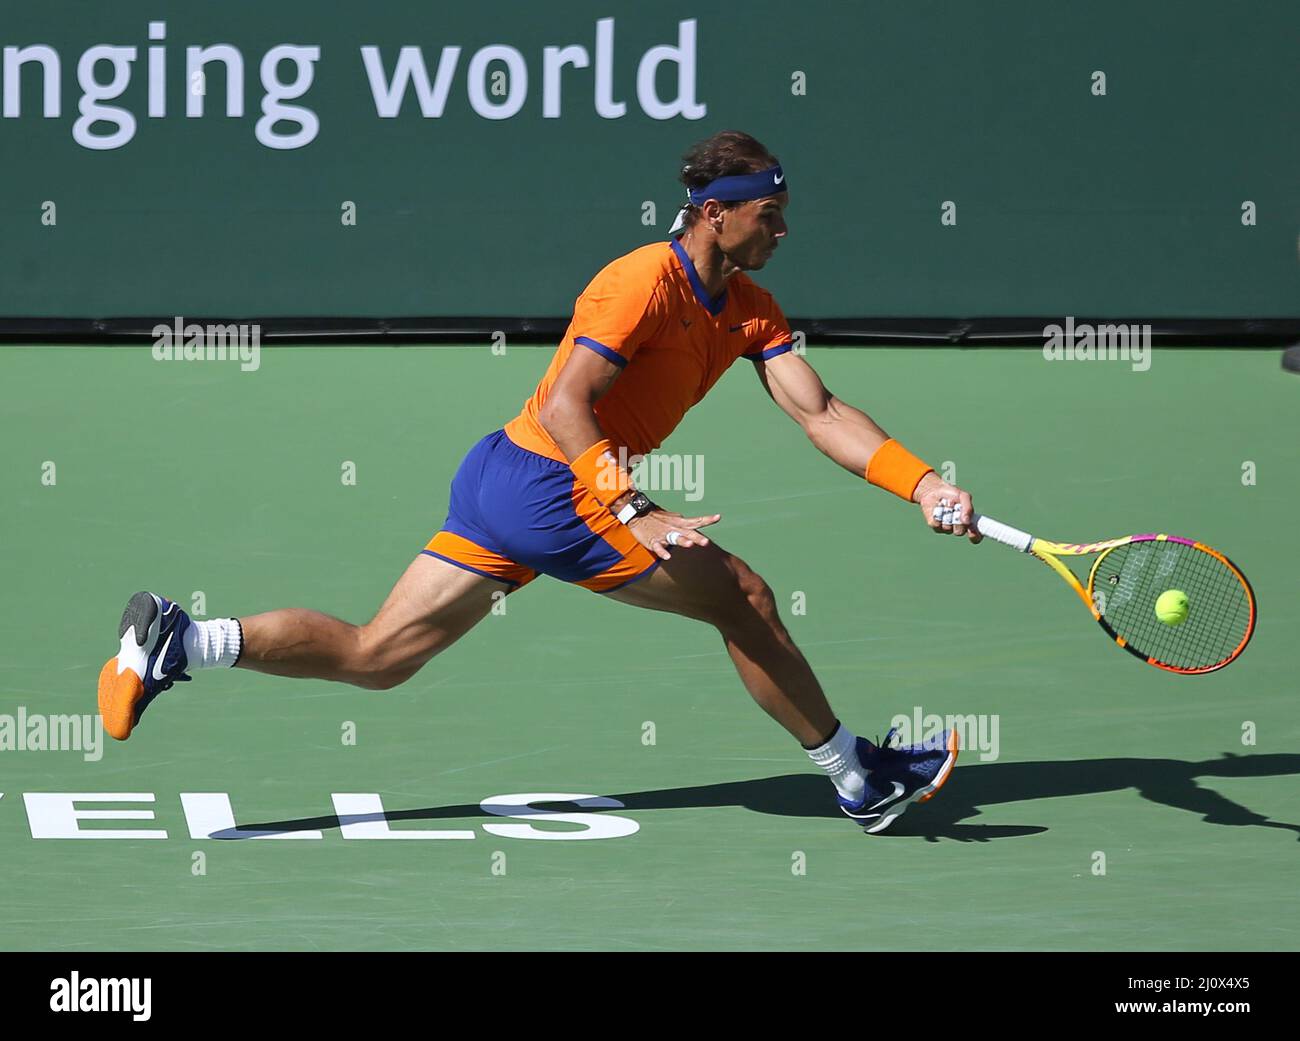 Indian Wells: Taylor Fritz snaps Rafael Nadal's 20-match winning